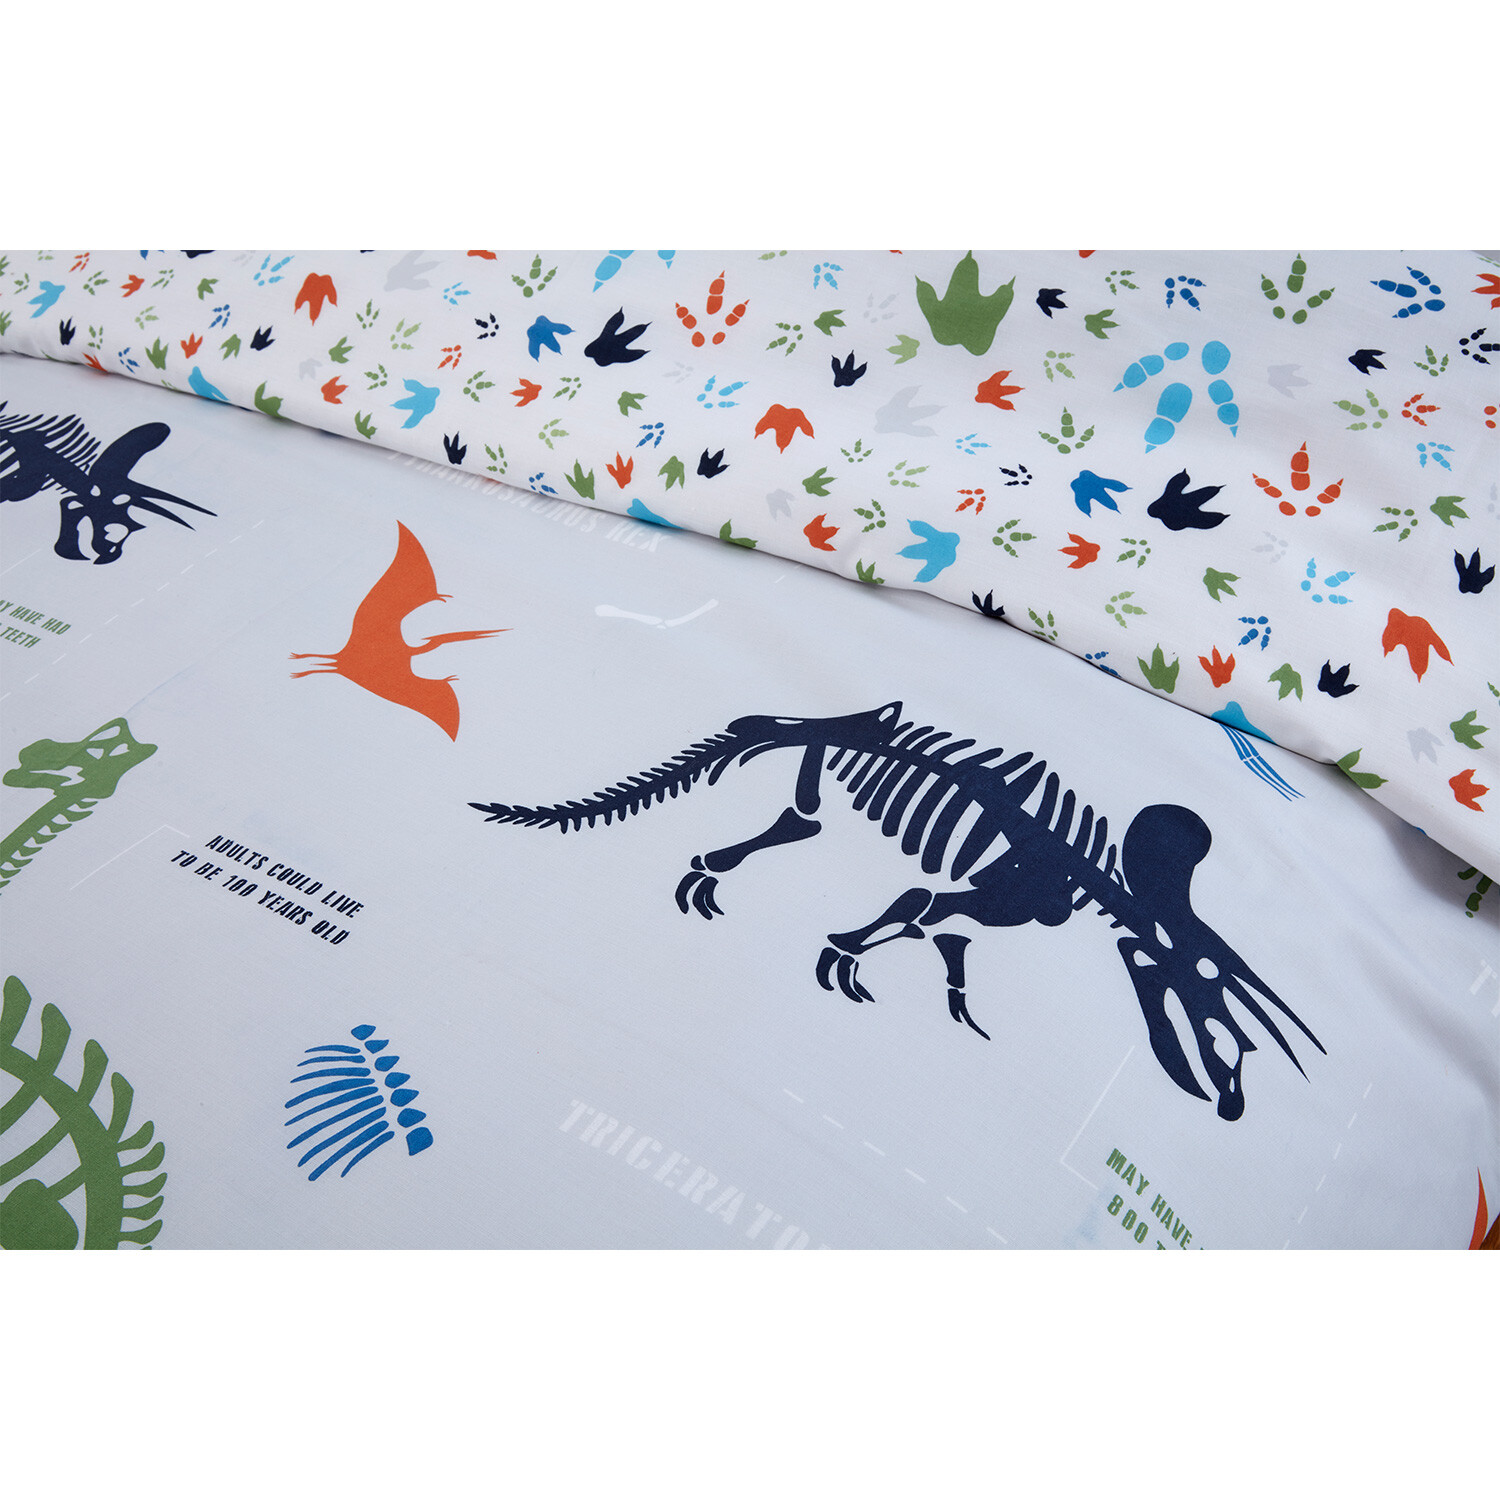 Dinosaur Duvet Cover and Pillowcase Set - Grey Image 5